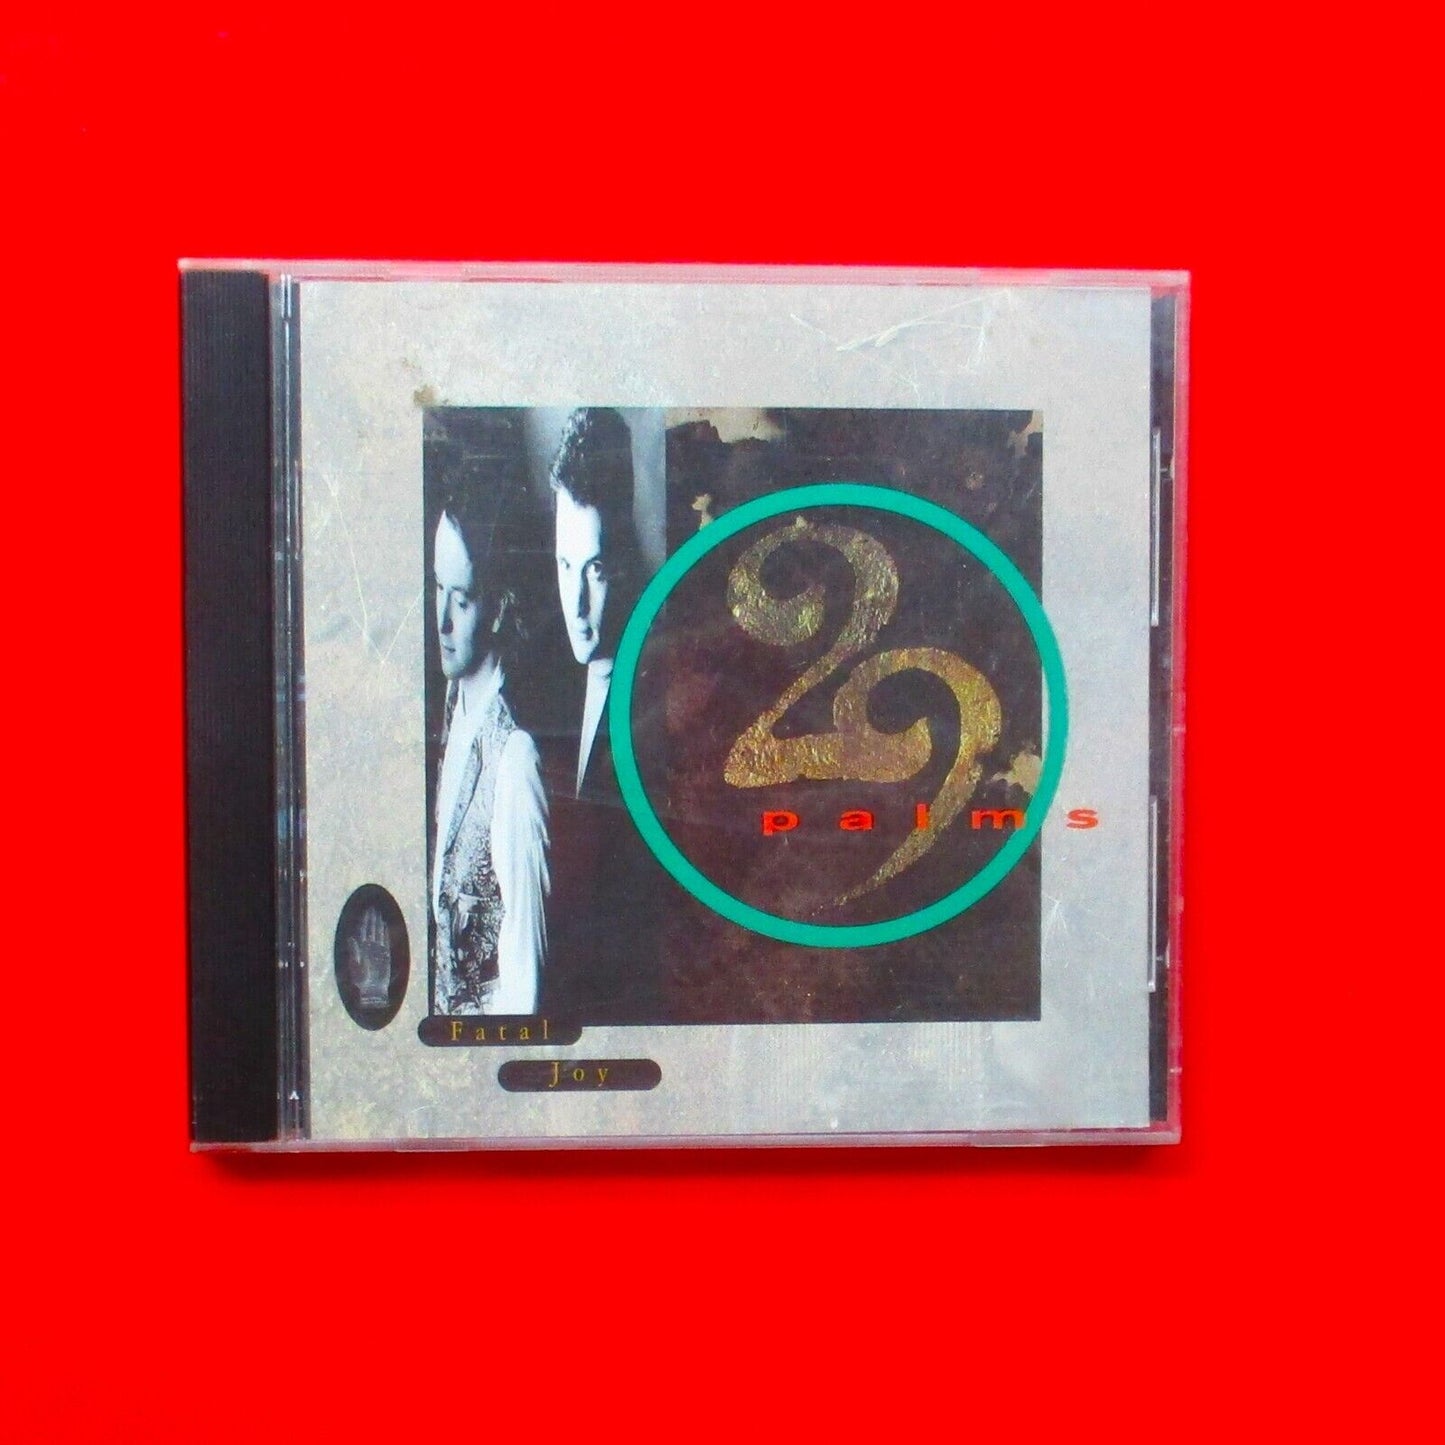 29 Palms Fatal Joy 1990 US CD Album Folk Rock